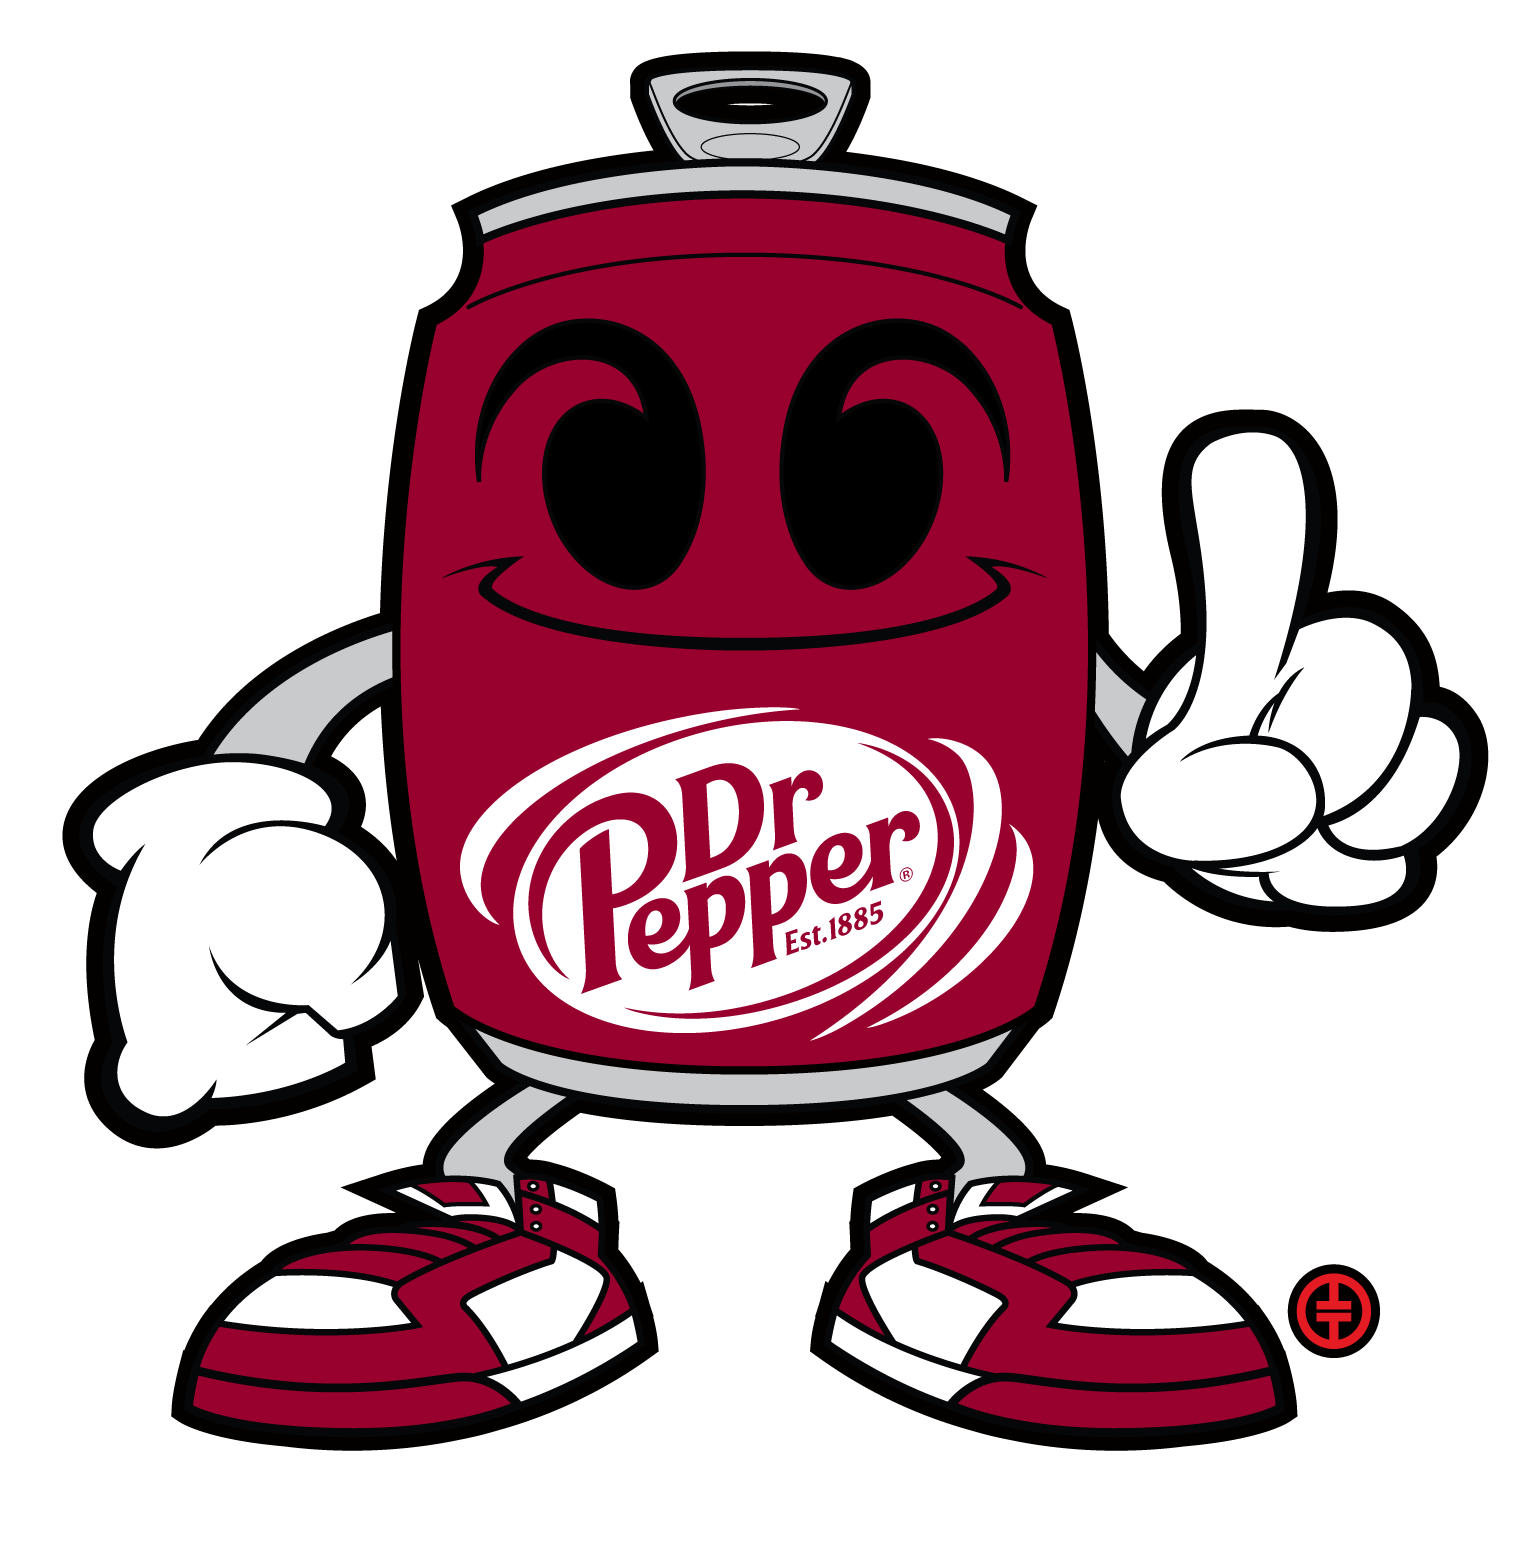 Mr pepper. Пеппер доктор Пеппер. Доктор Пеппер логотип. Доктор Пеппер рисунок. Наклейка Dr Pepper.